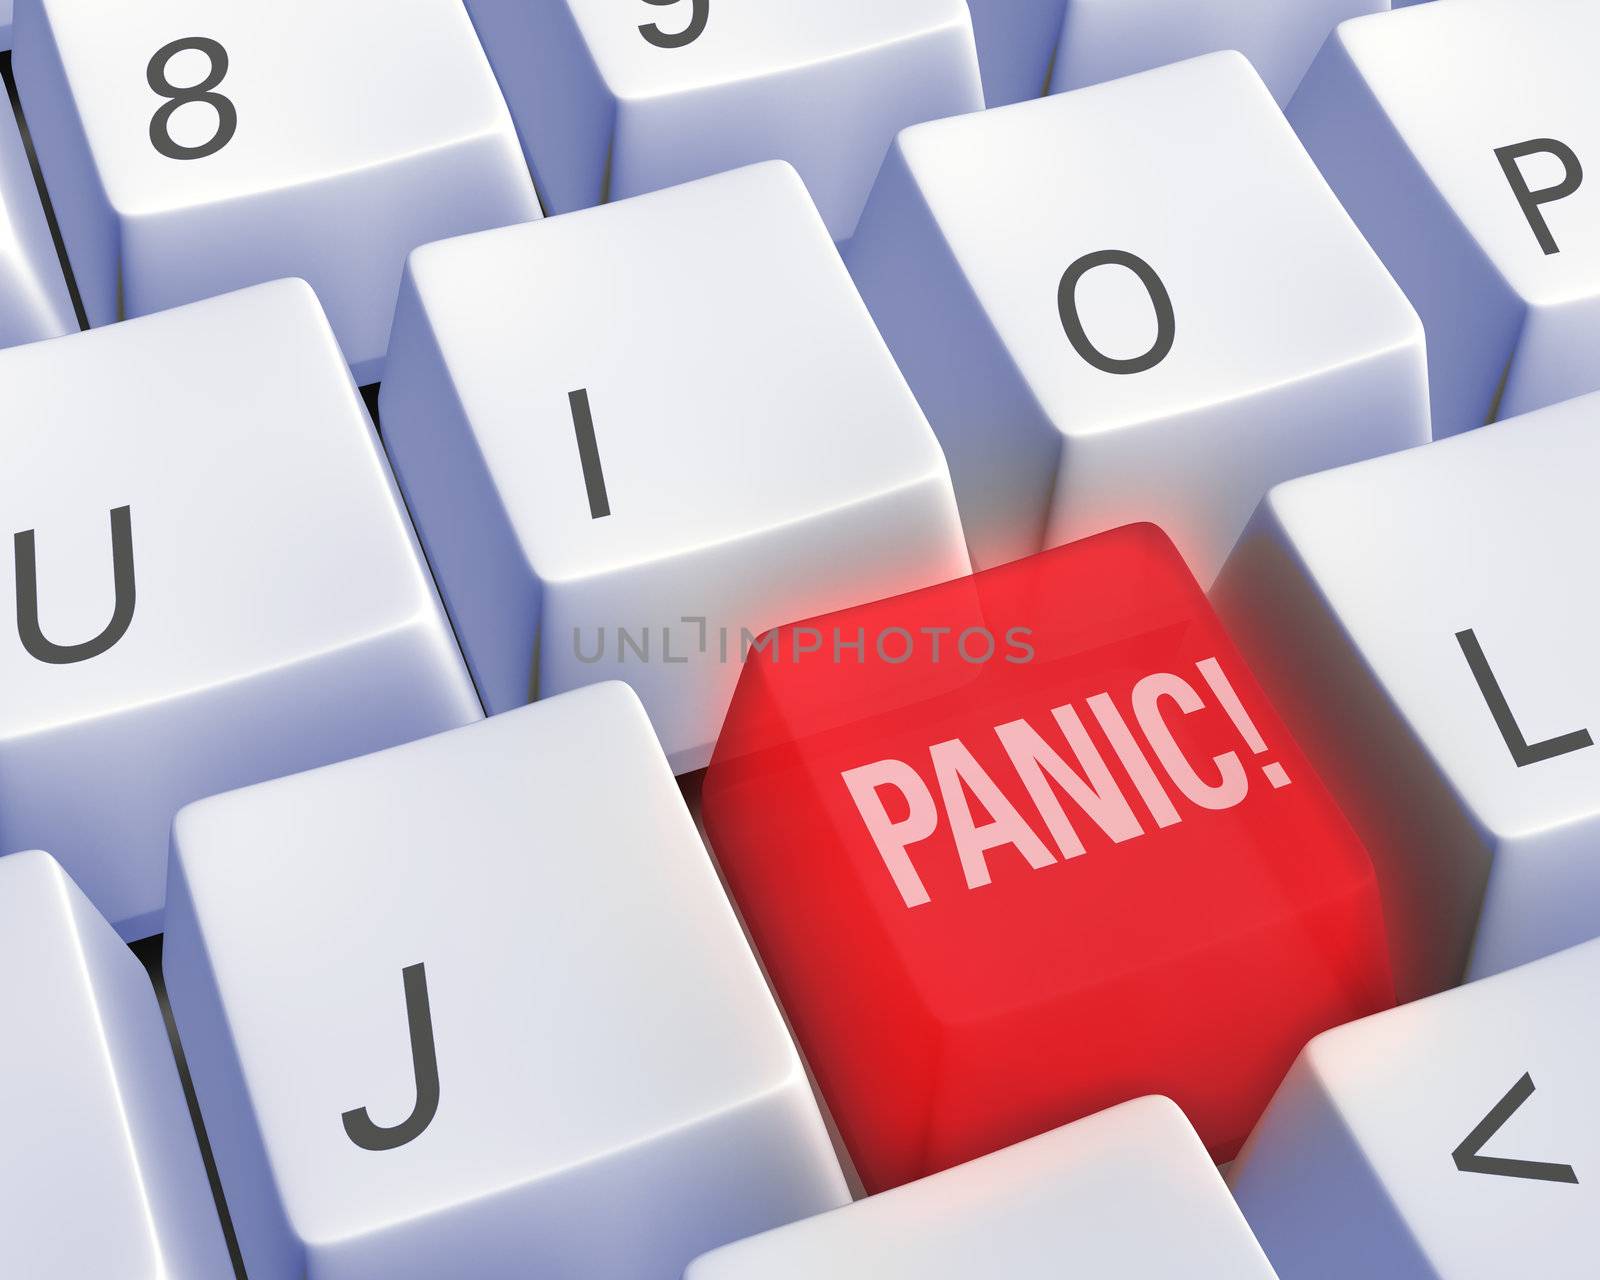 Technology - Panic! by Em3